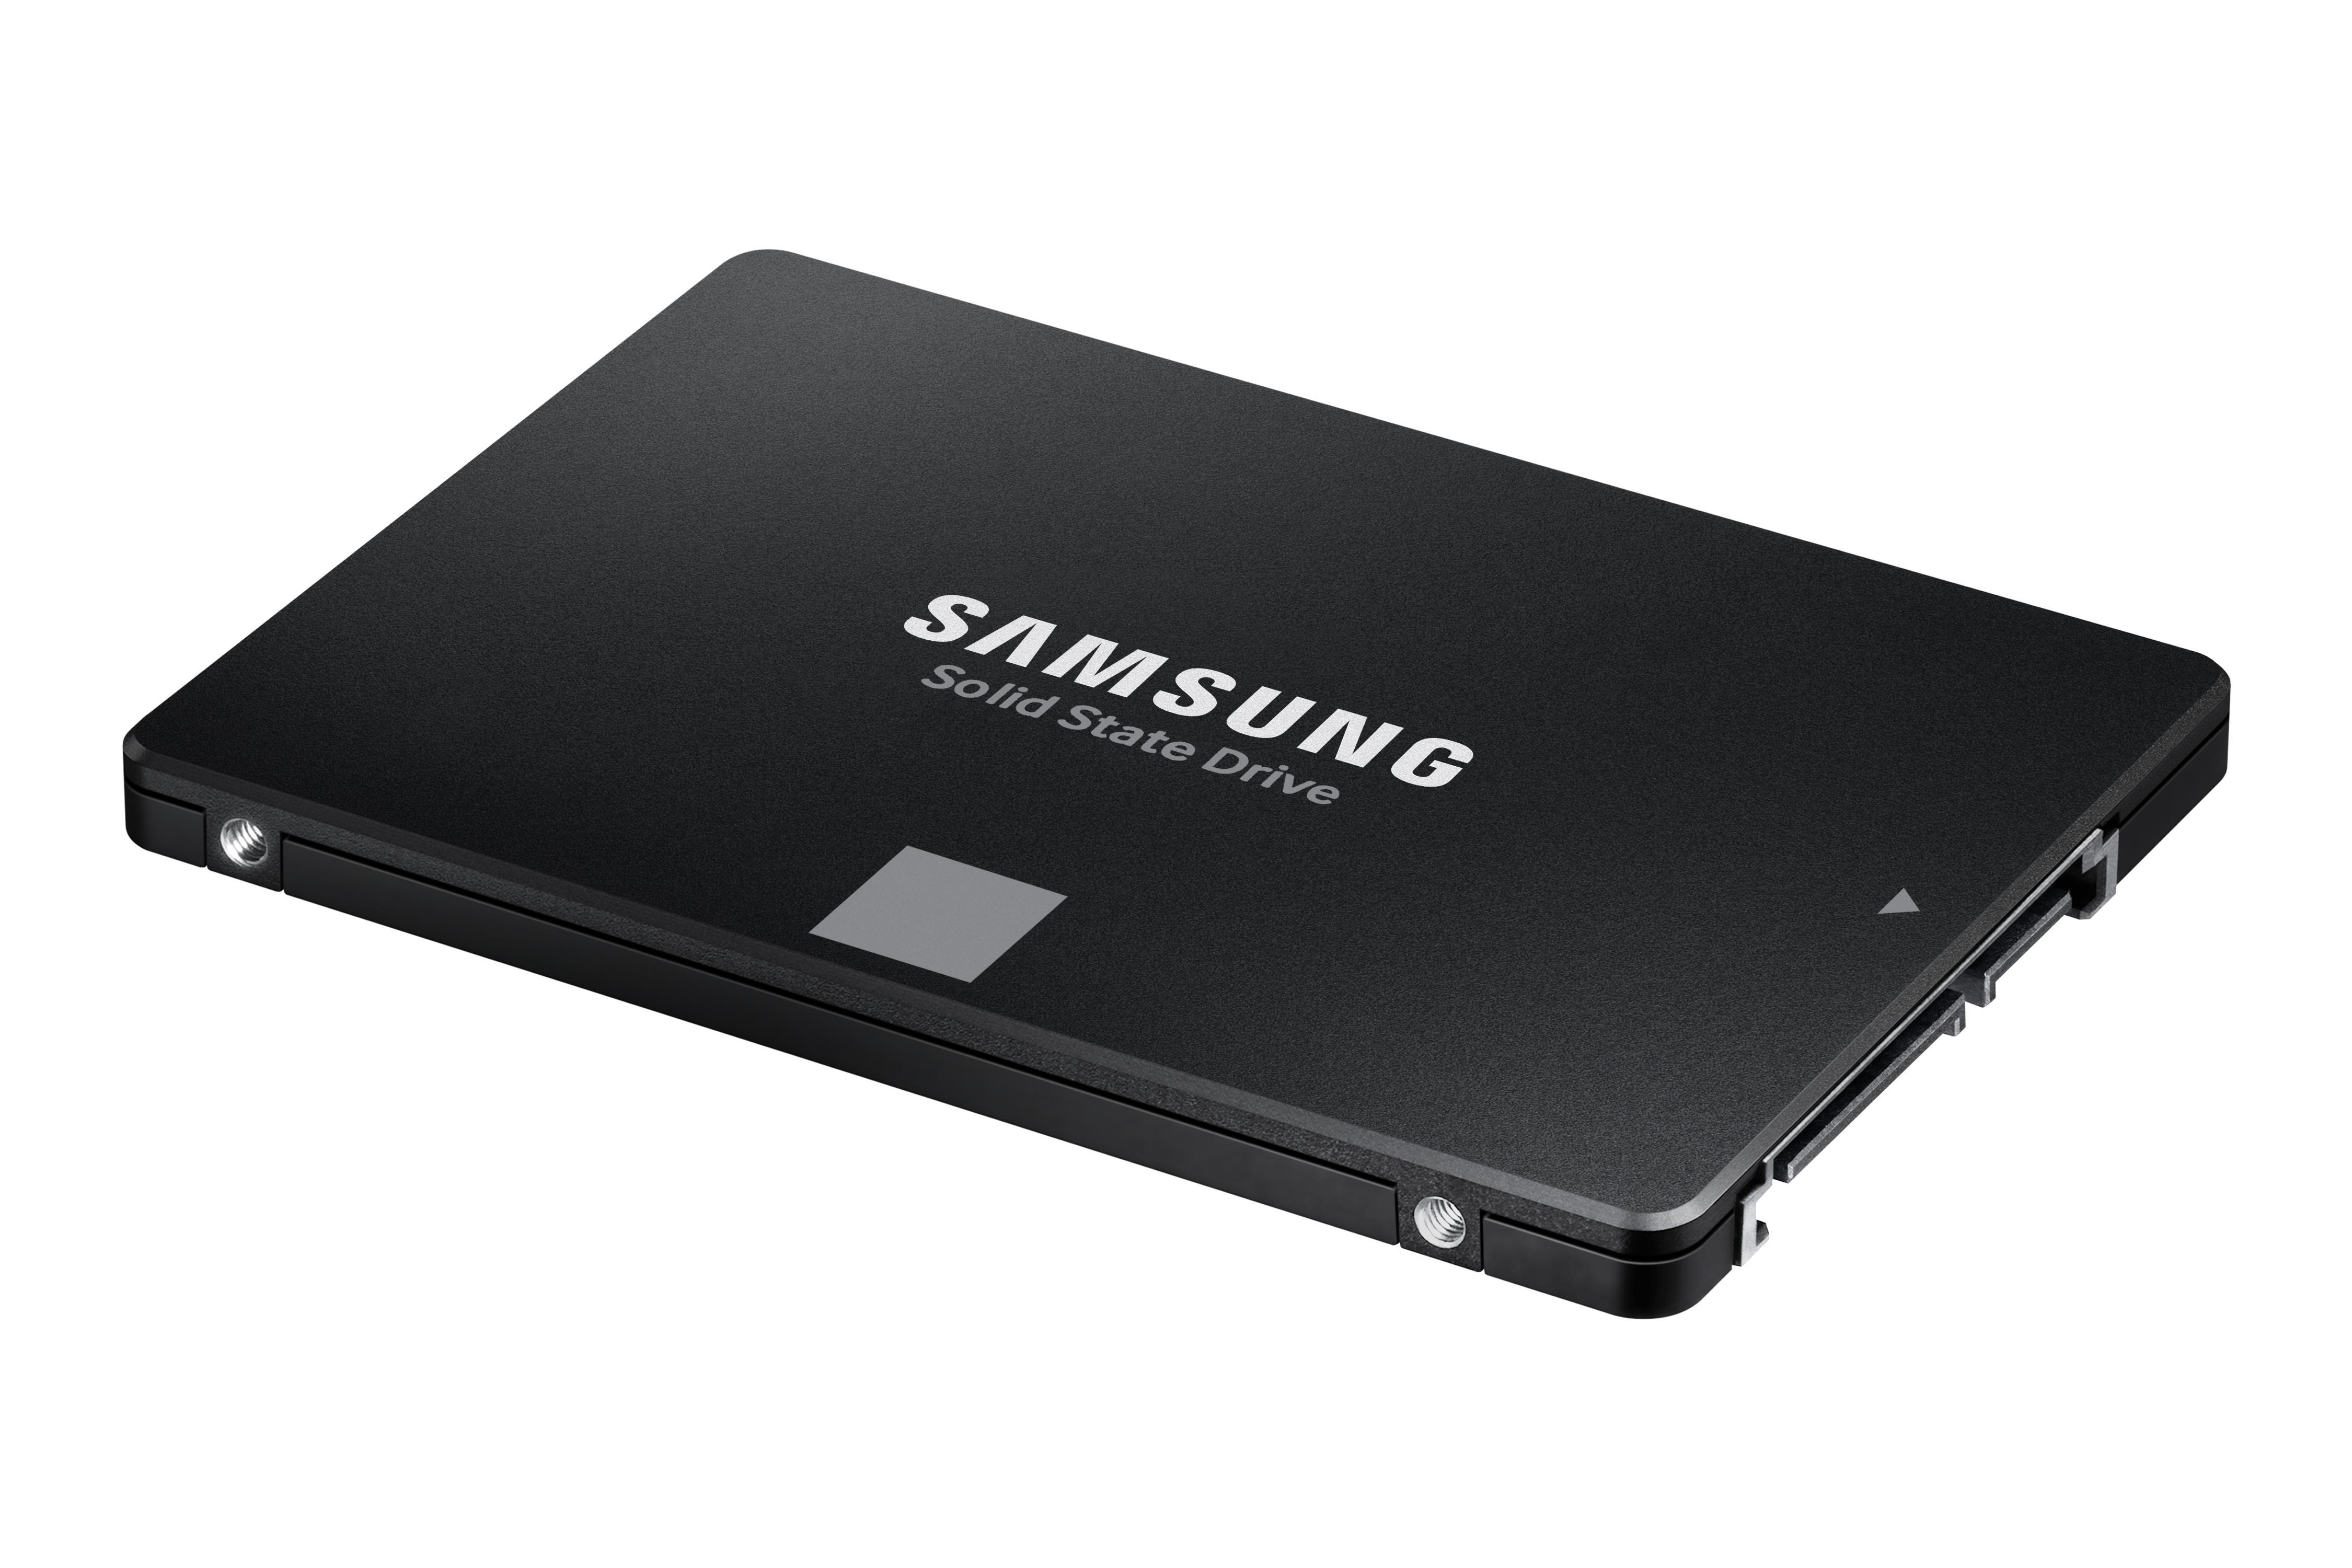 SAMSUNG 870 EVO SSD Gbps, TB SATA 6 2 Zoll, 2,5 Festplatte Retail, intern